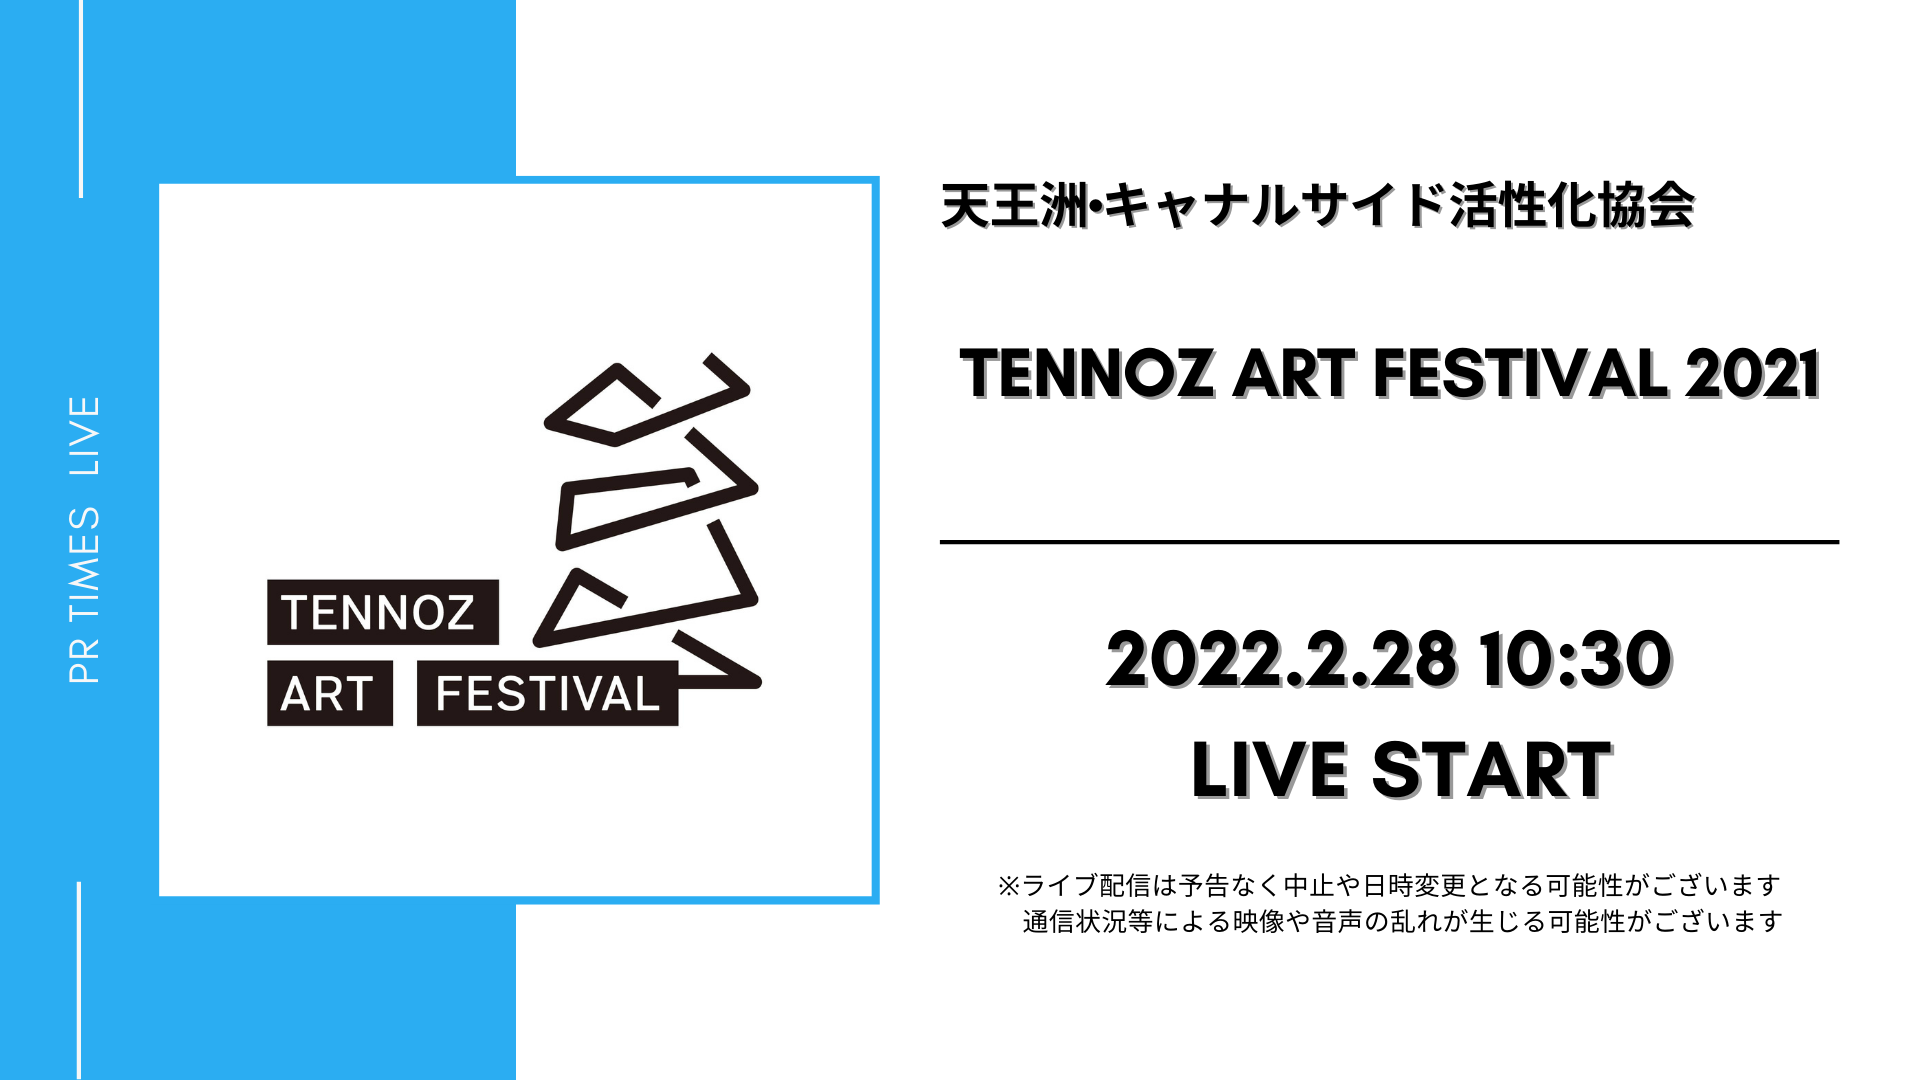 TENNOZ ART FESTIVAL 2021